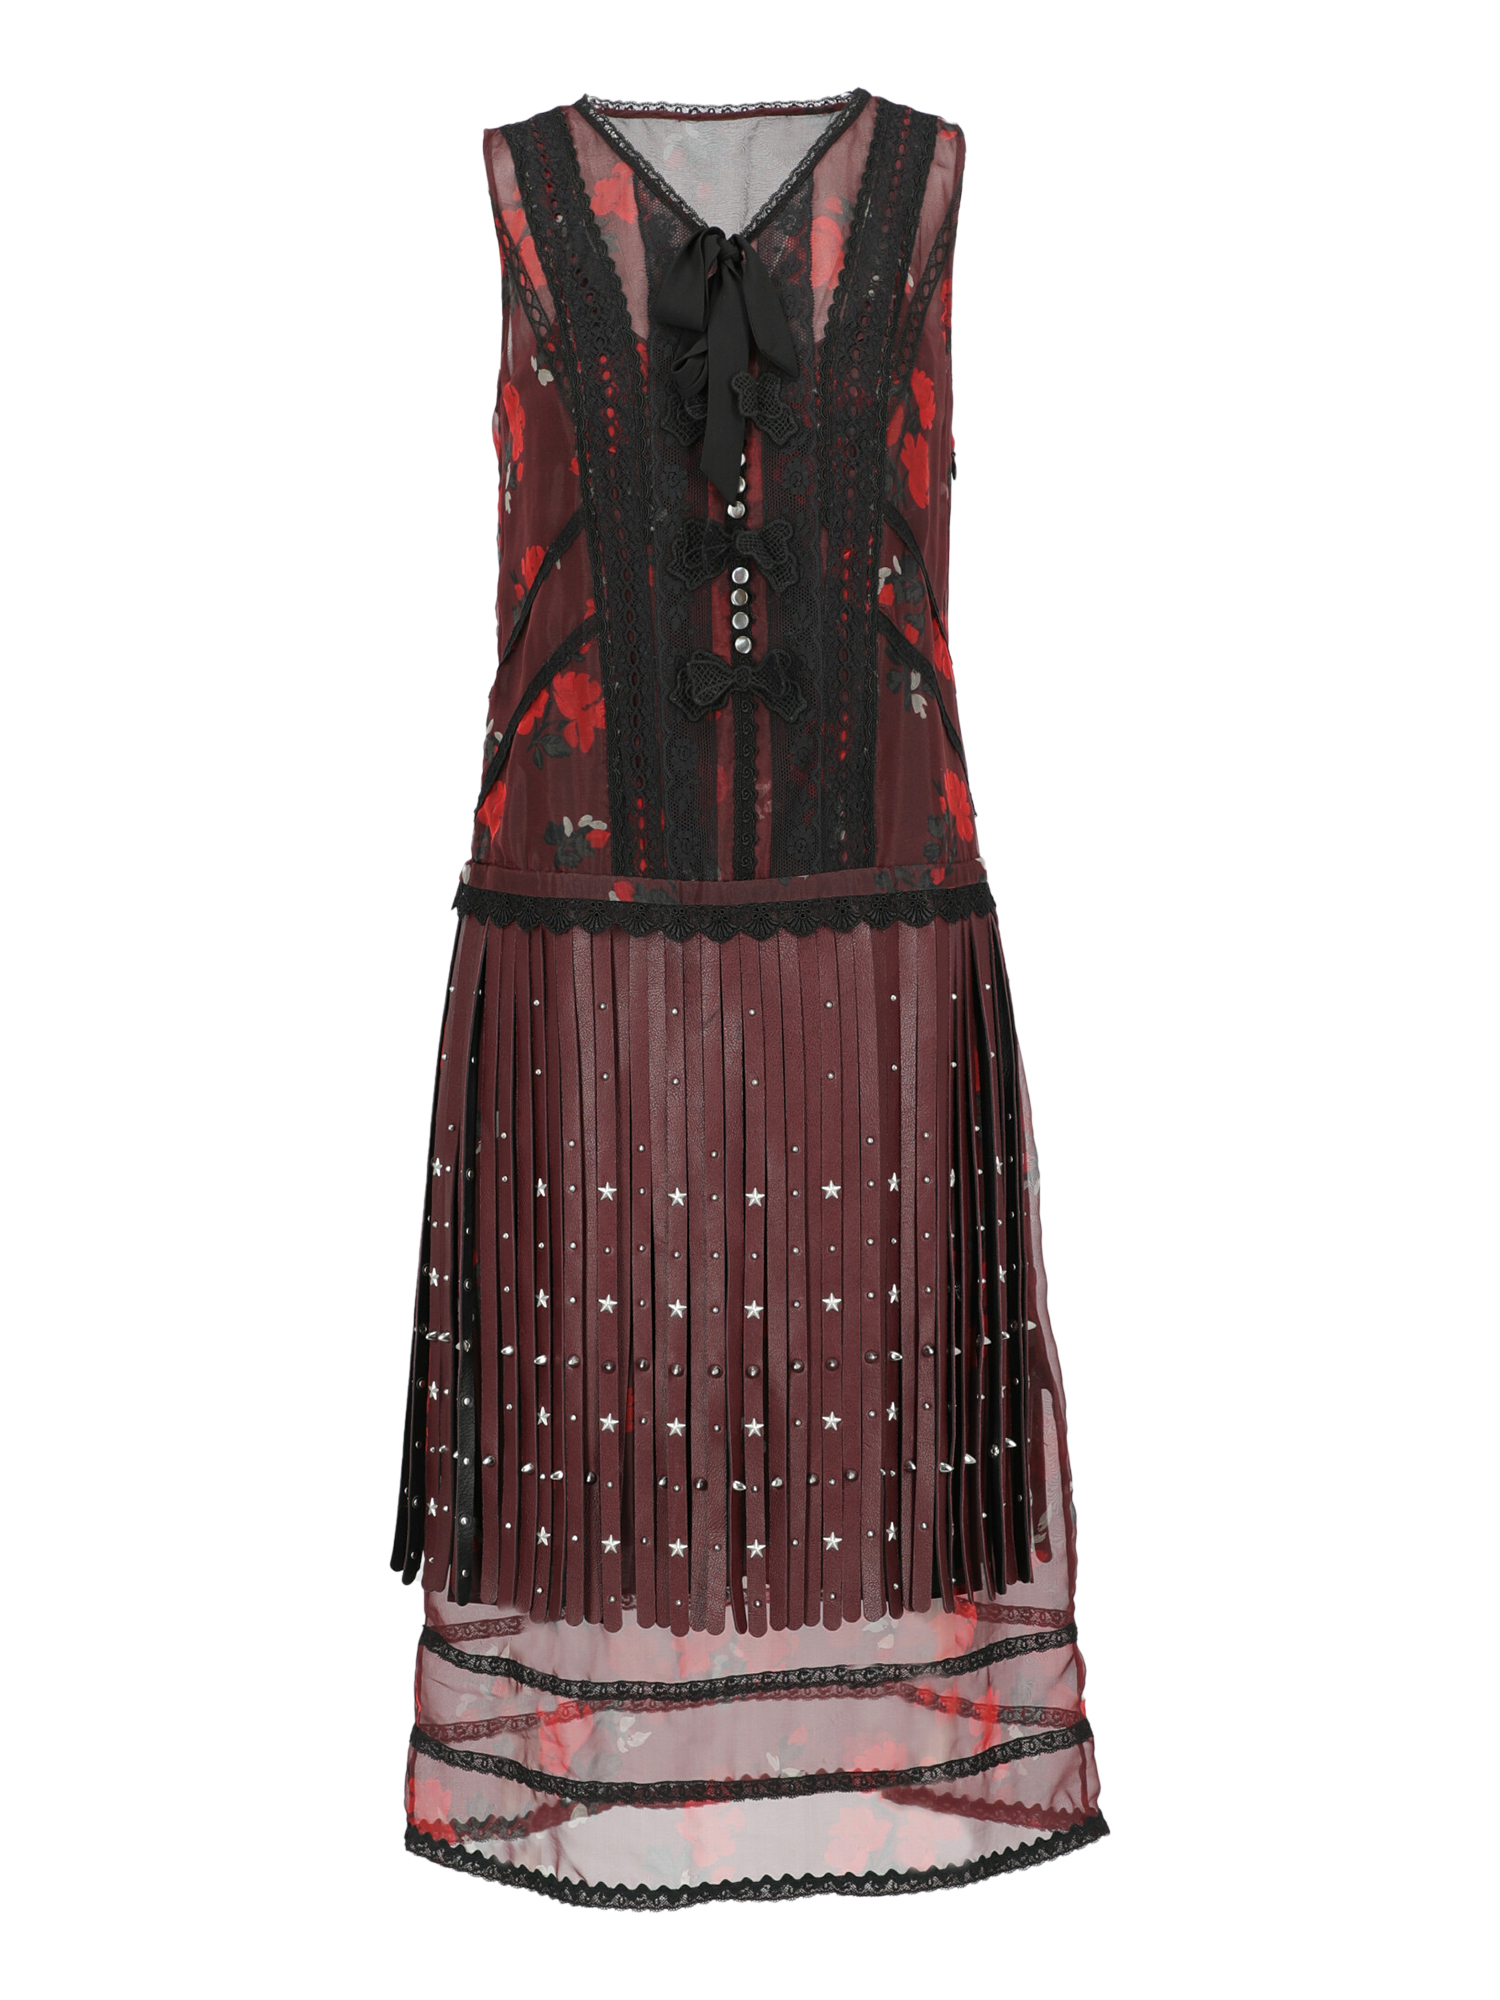 Black, Burgundy & Red Silk Dress